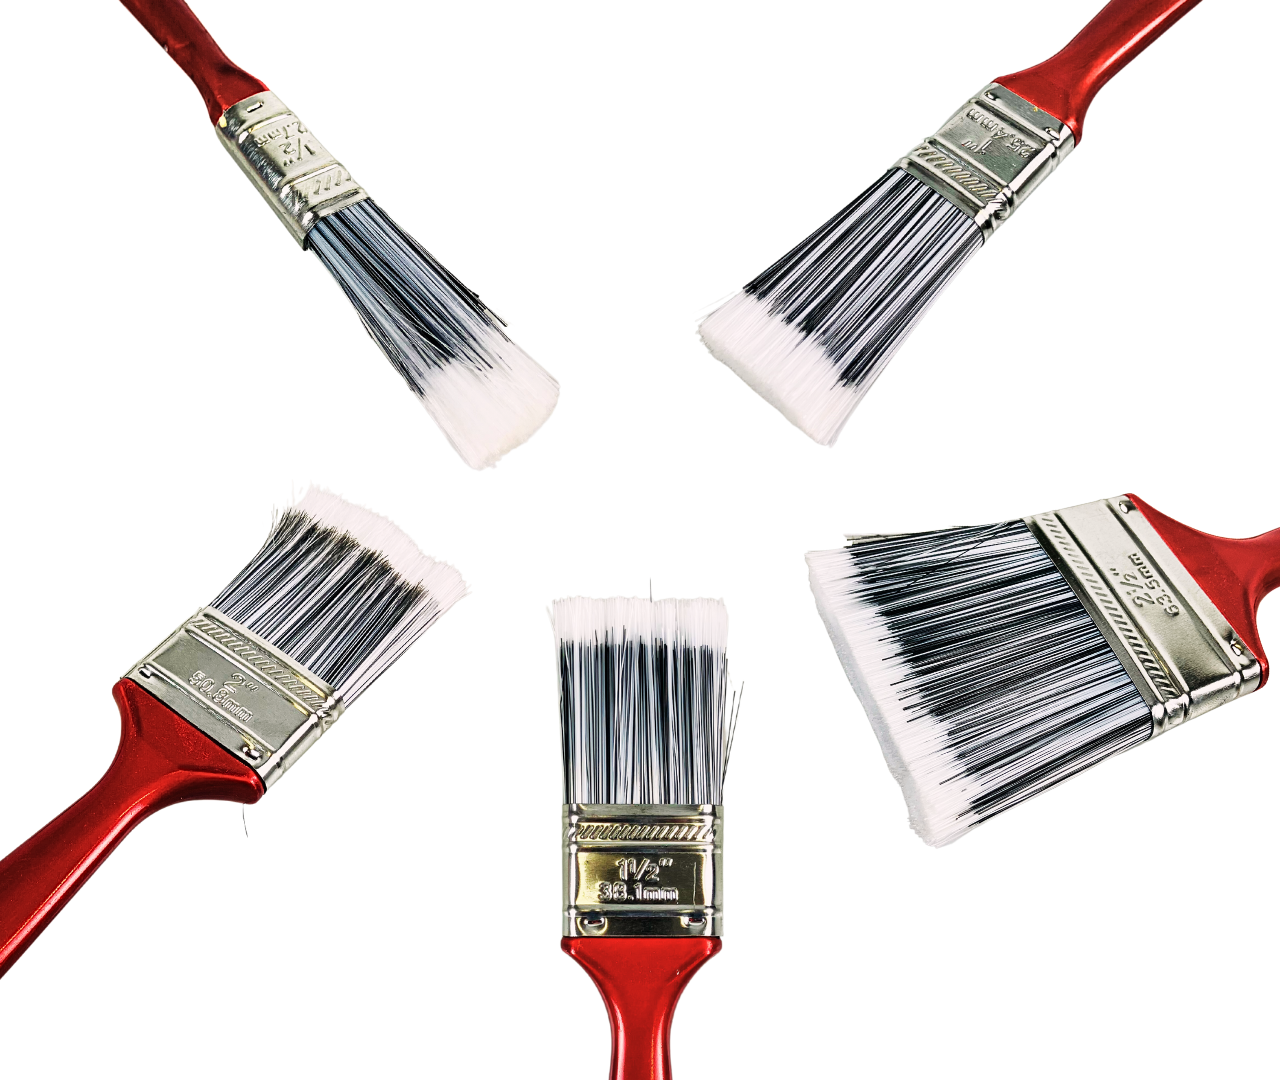 5 Pc. Painter's Brush Set - TZ63-28487